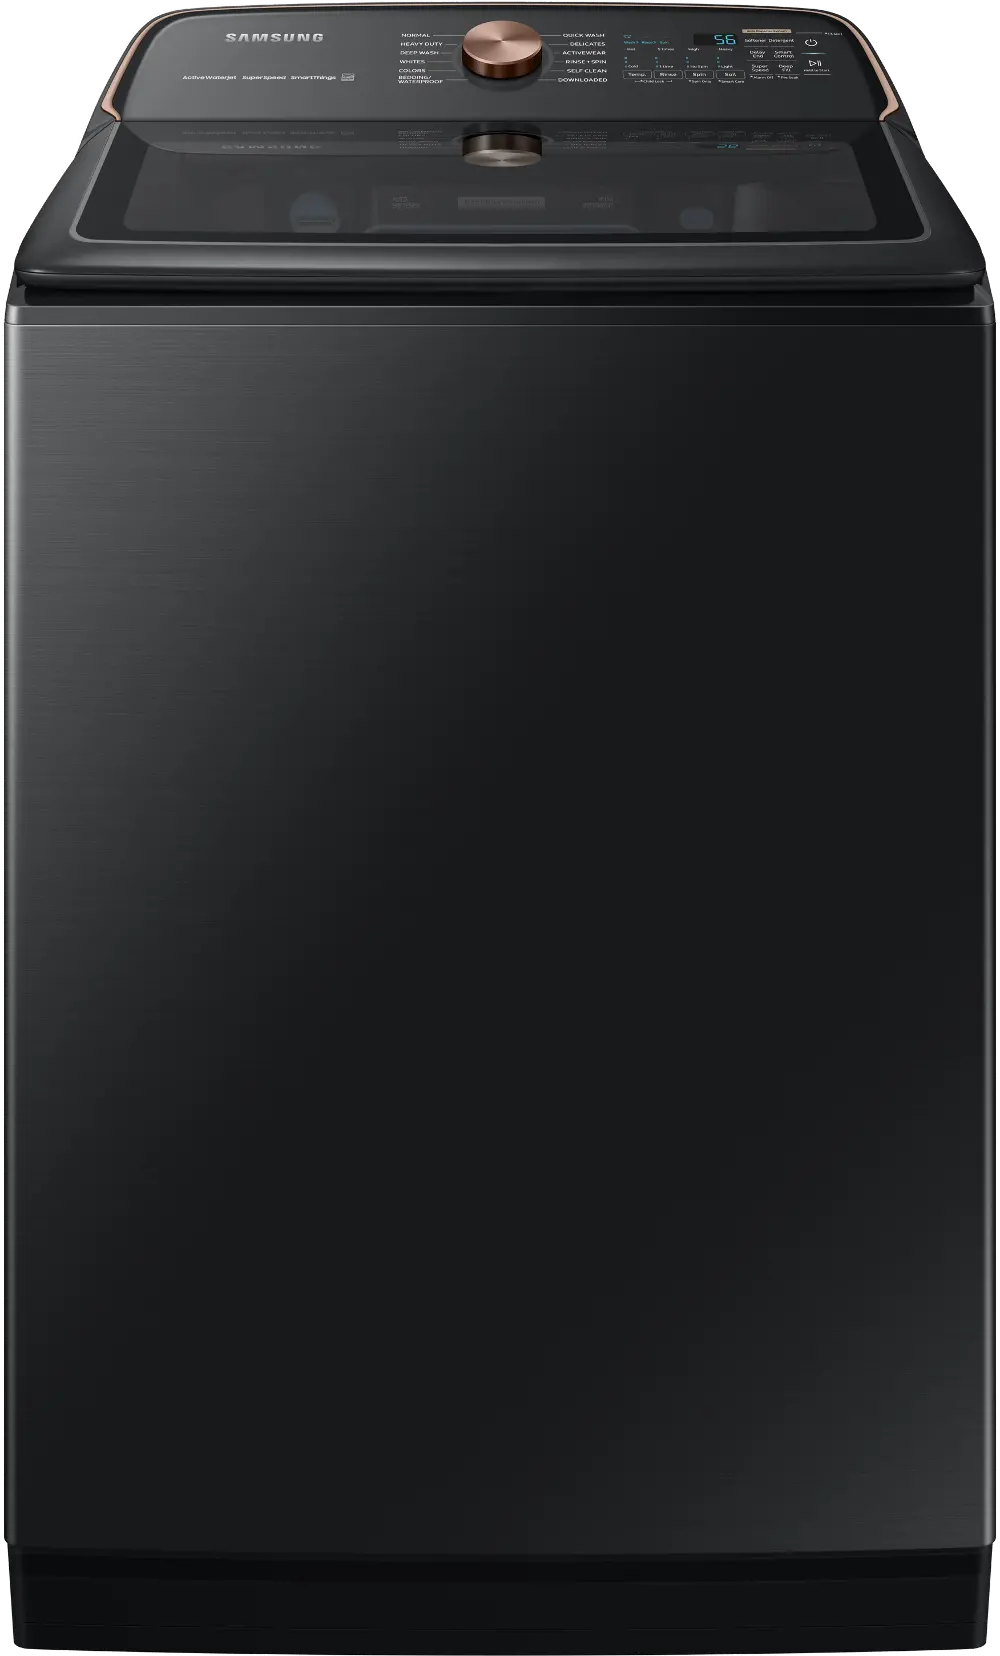 WA55A7700AV Samsung 5.5 cu ft Top Load Washer - Brushed Black 53BB8900-1